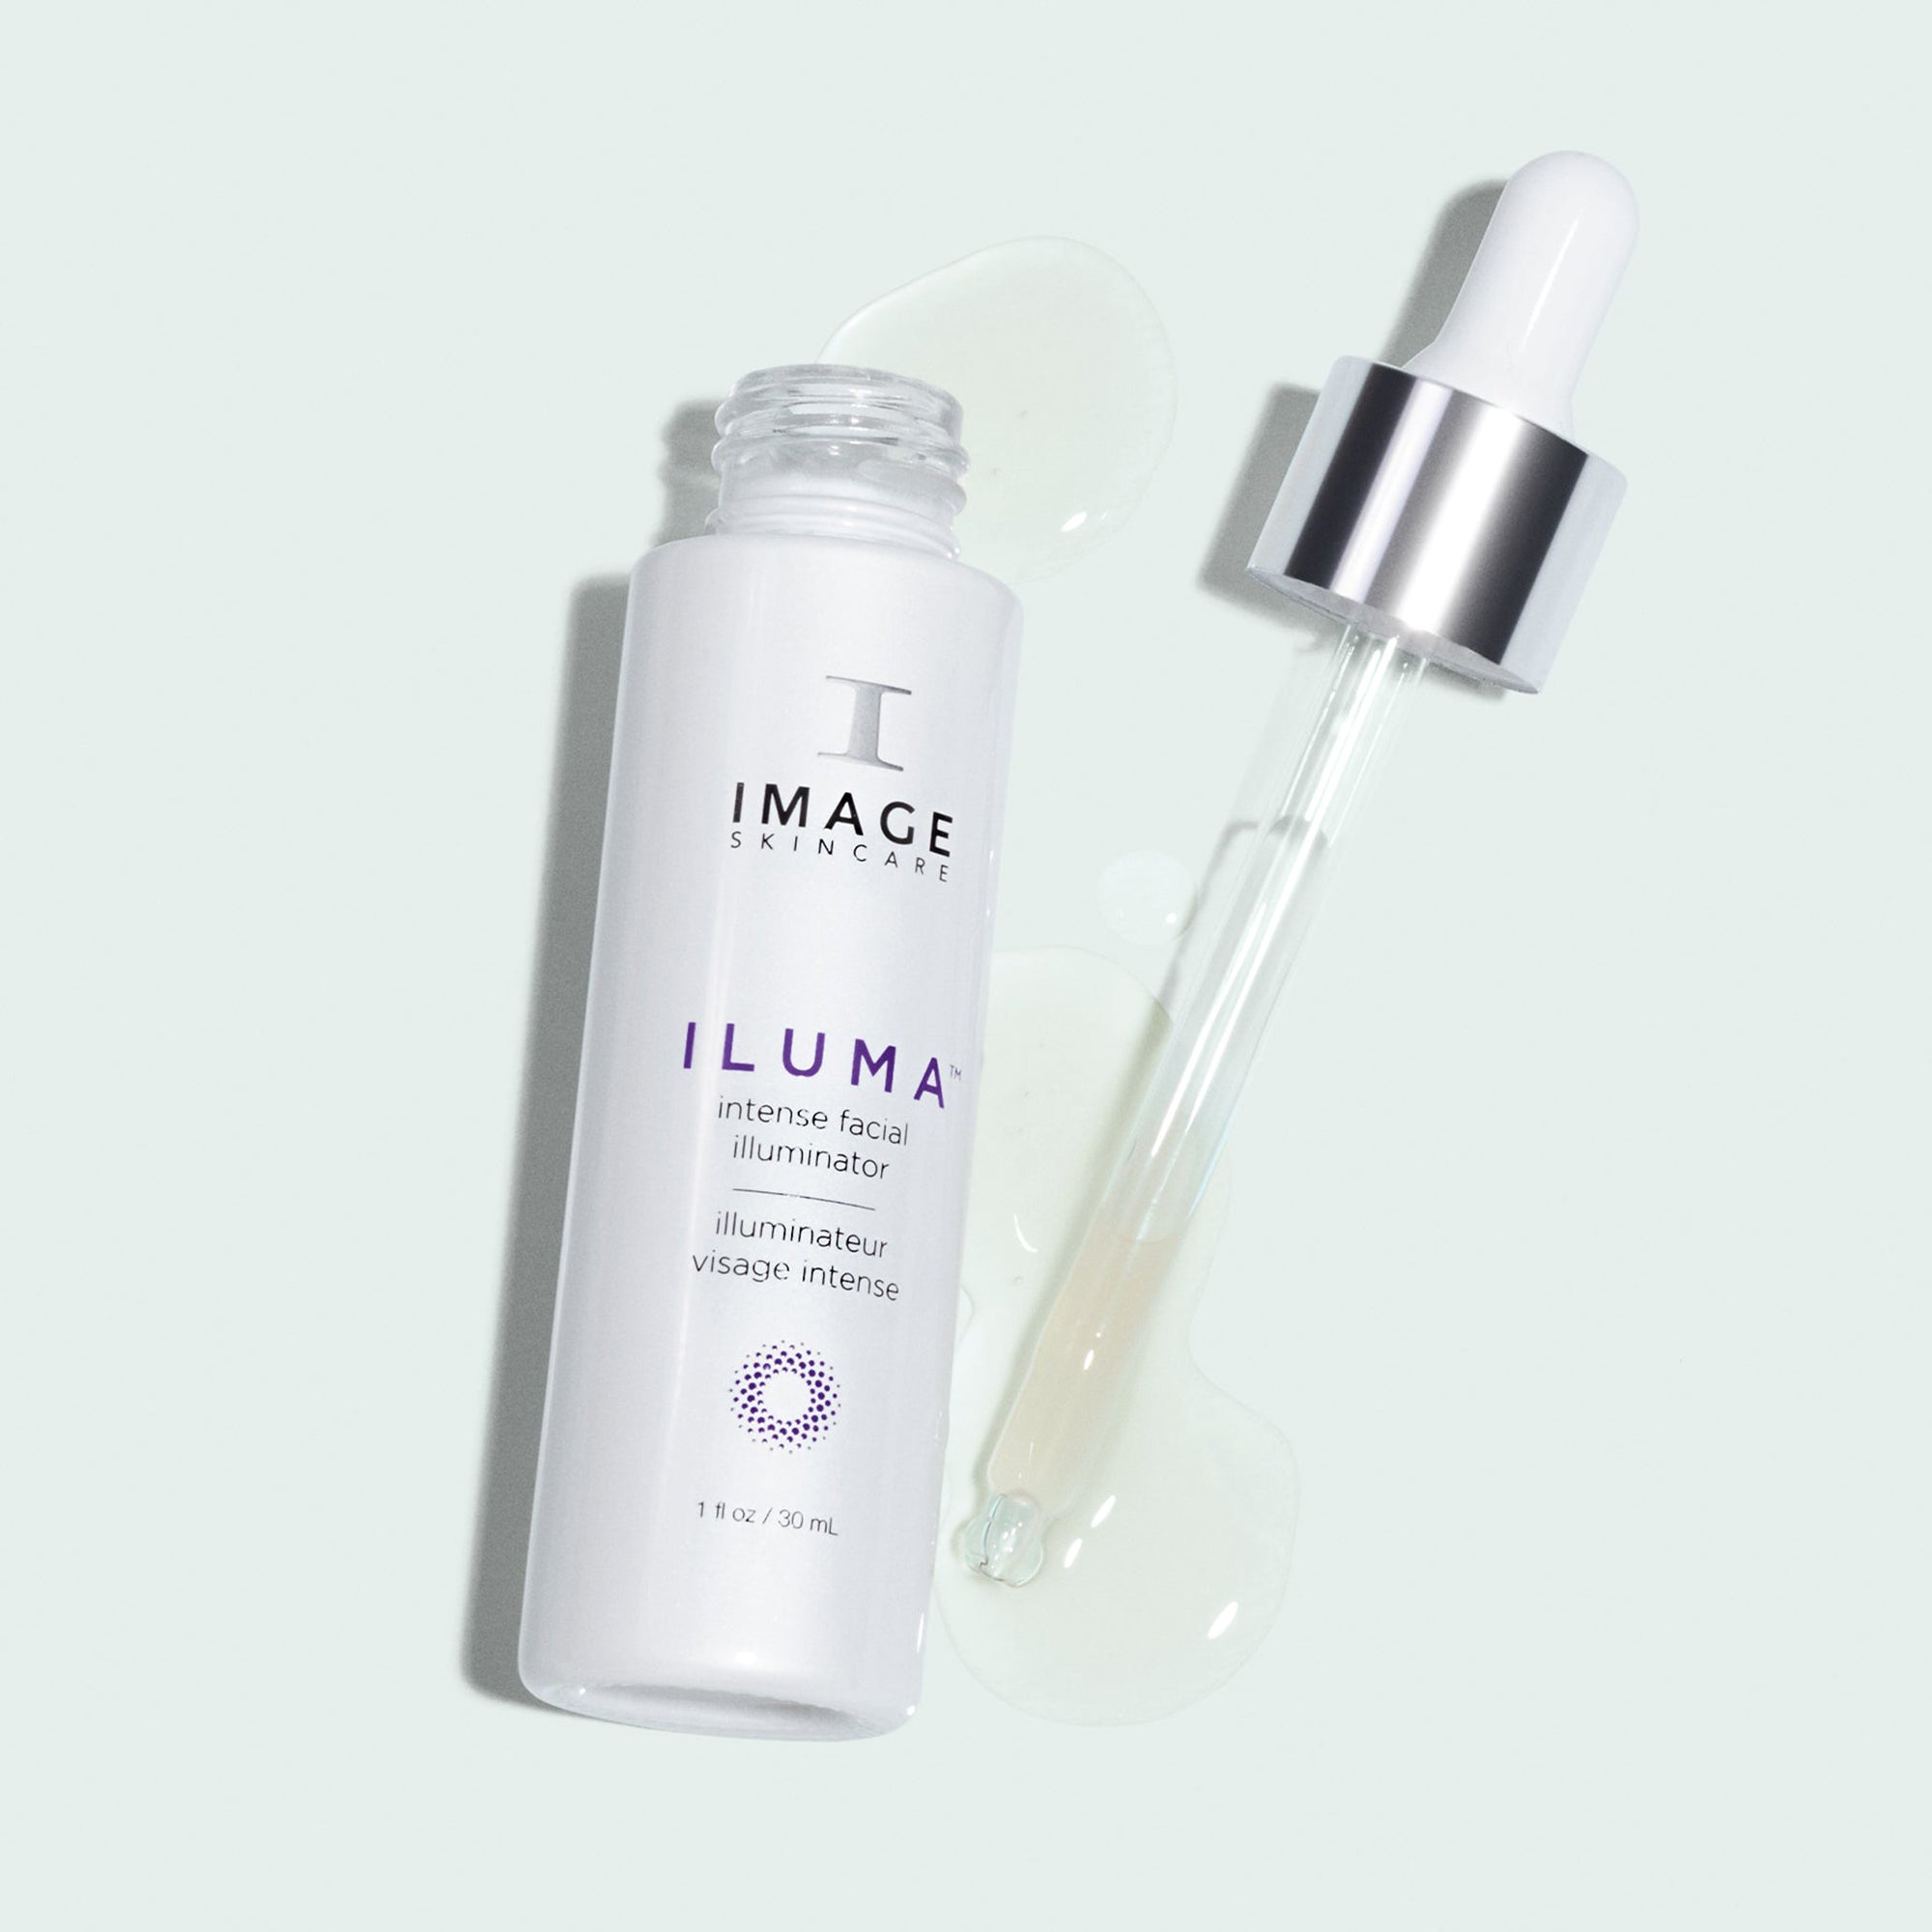 Image Skincare Iluma Intense Brightening Creme - 1.7 oz (IL-204)